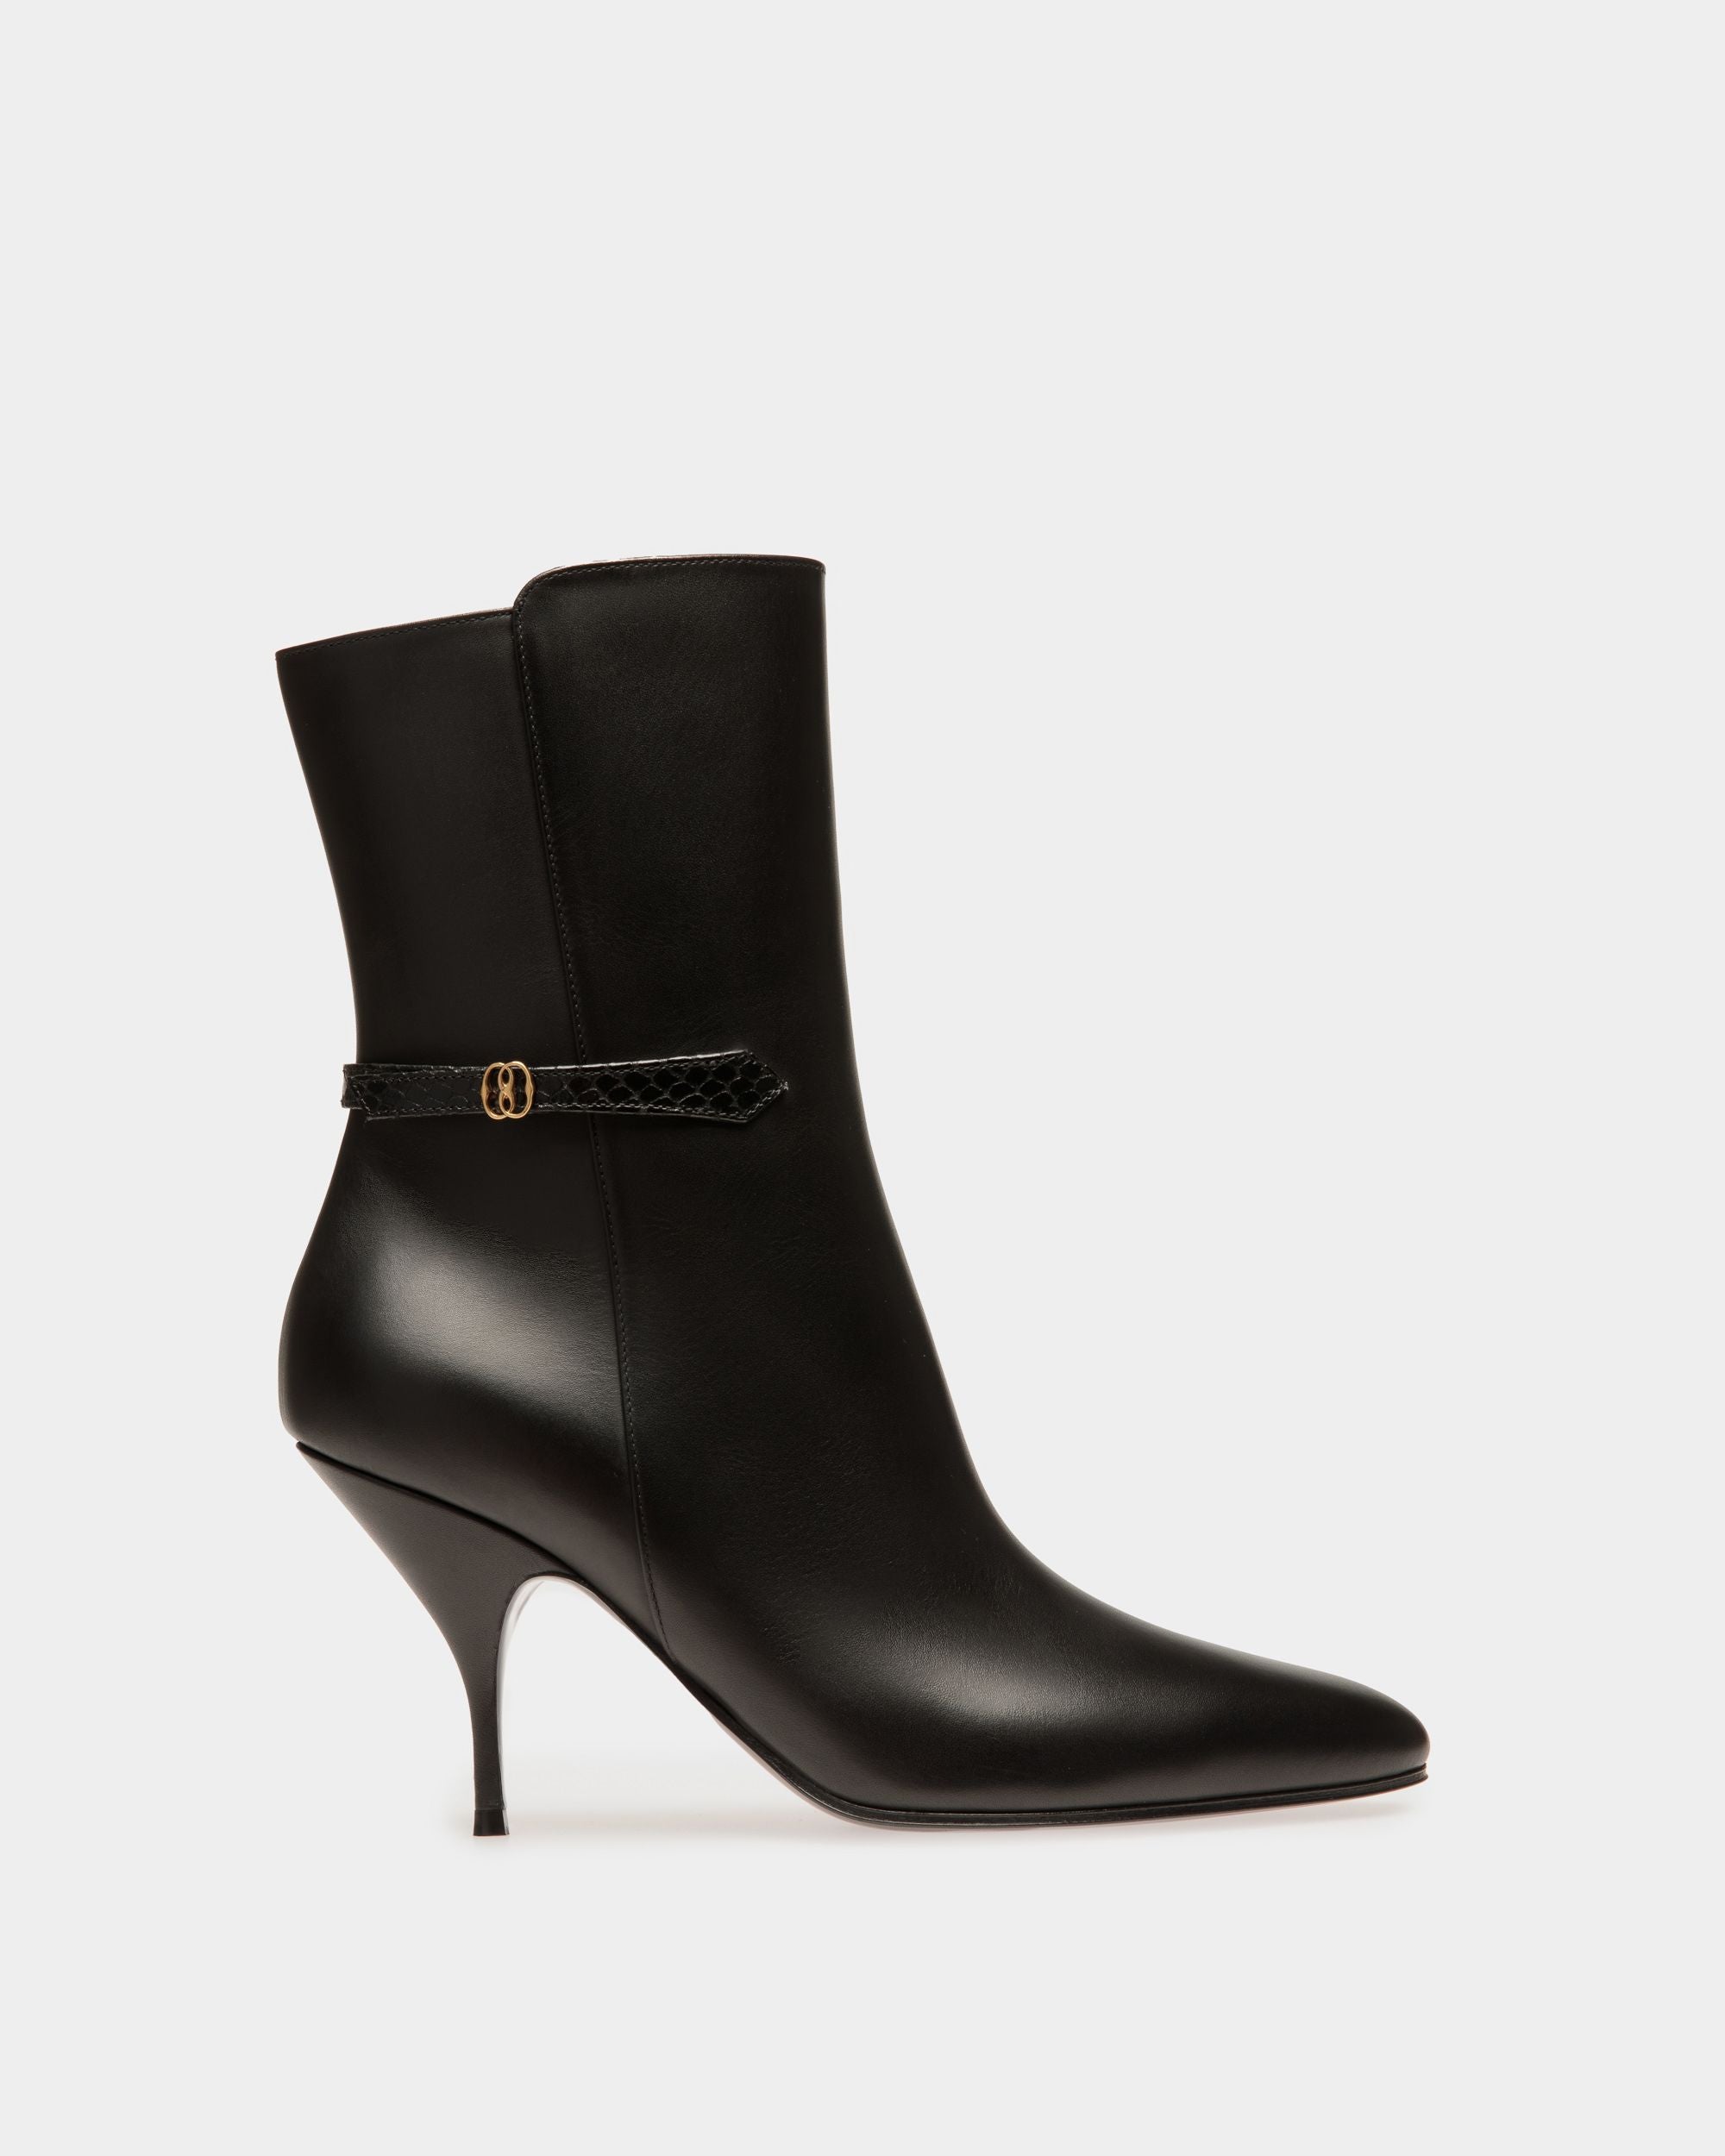 Odeya | Women's Boots | Black Leather | Bally | Still Life Side